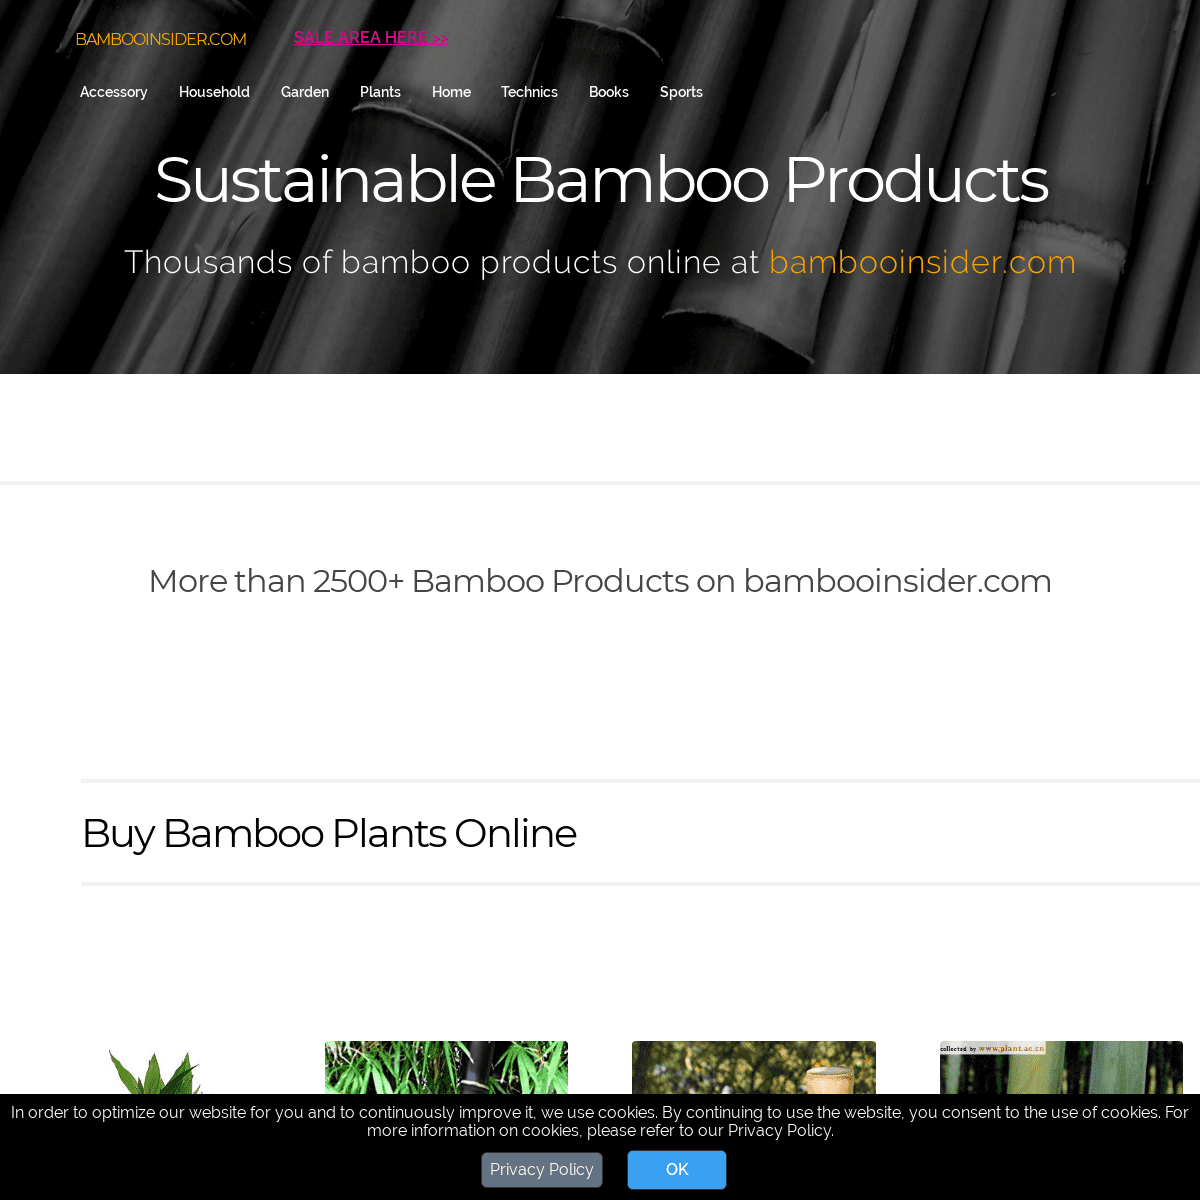 A complete backup of bambooinsider.com